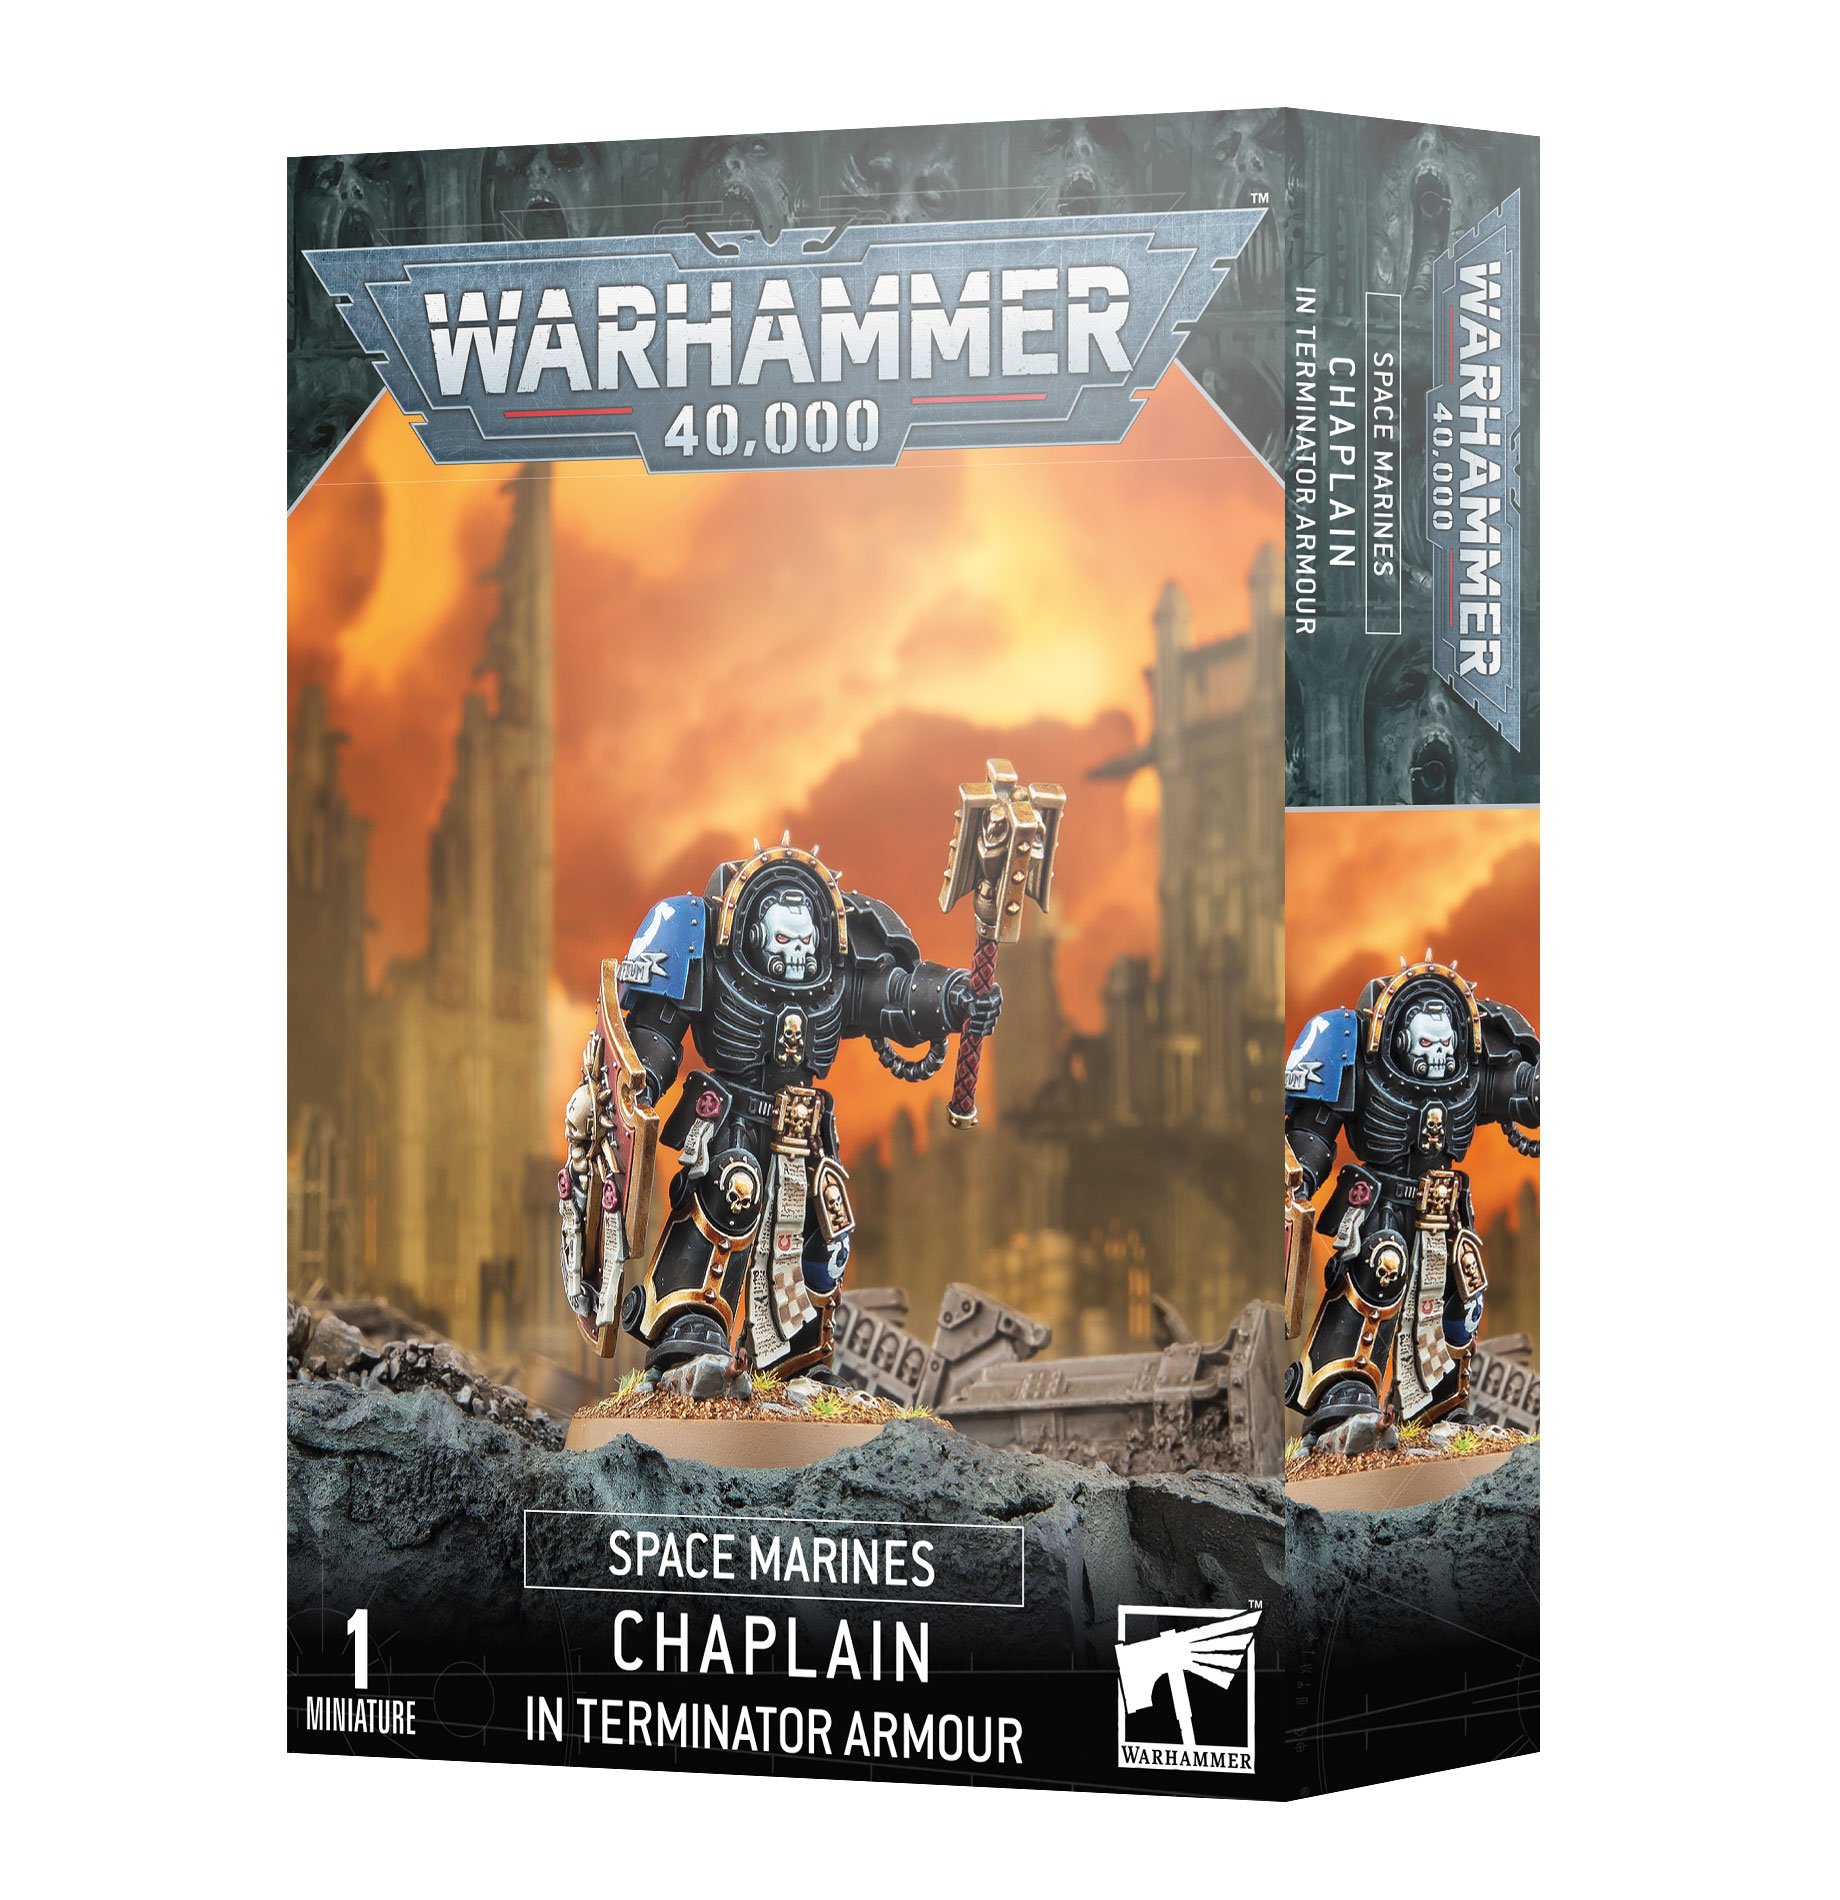 Warhammer 40,000: Space Marines: Chaplain in Terminator Armour 